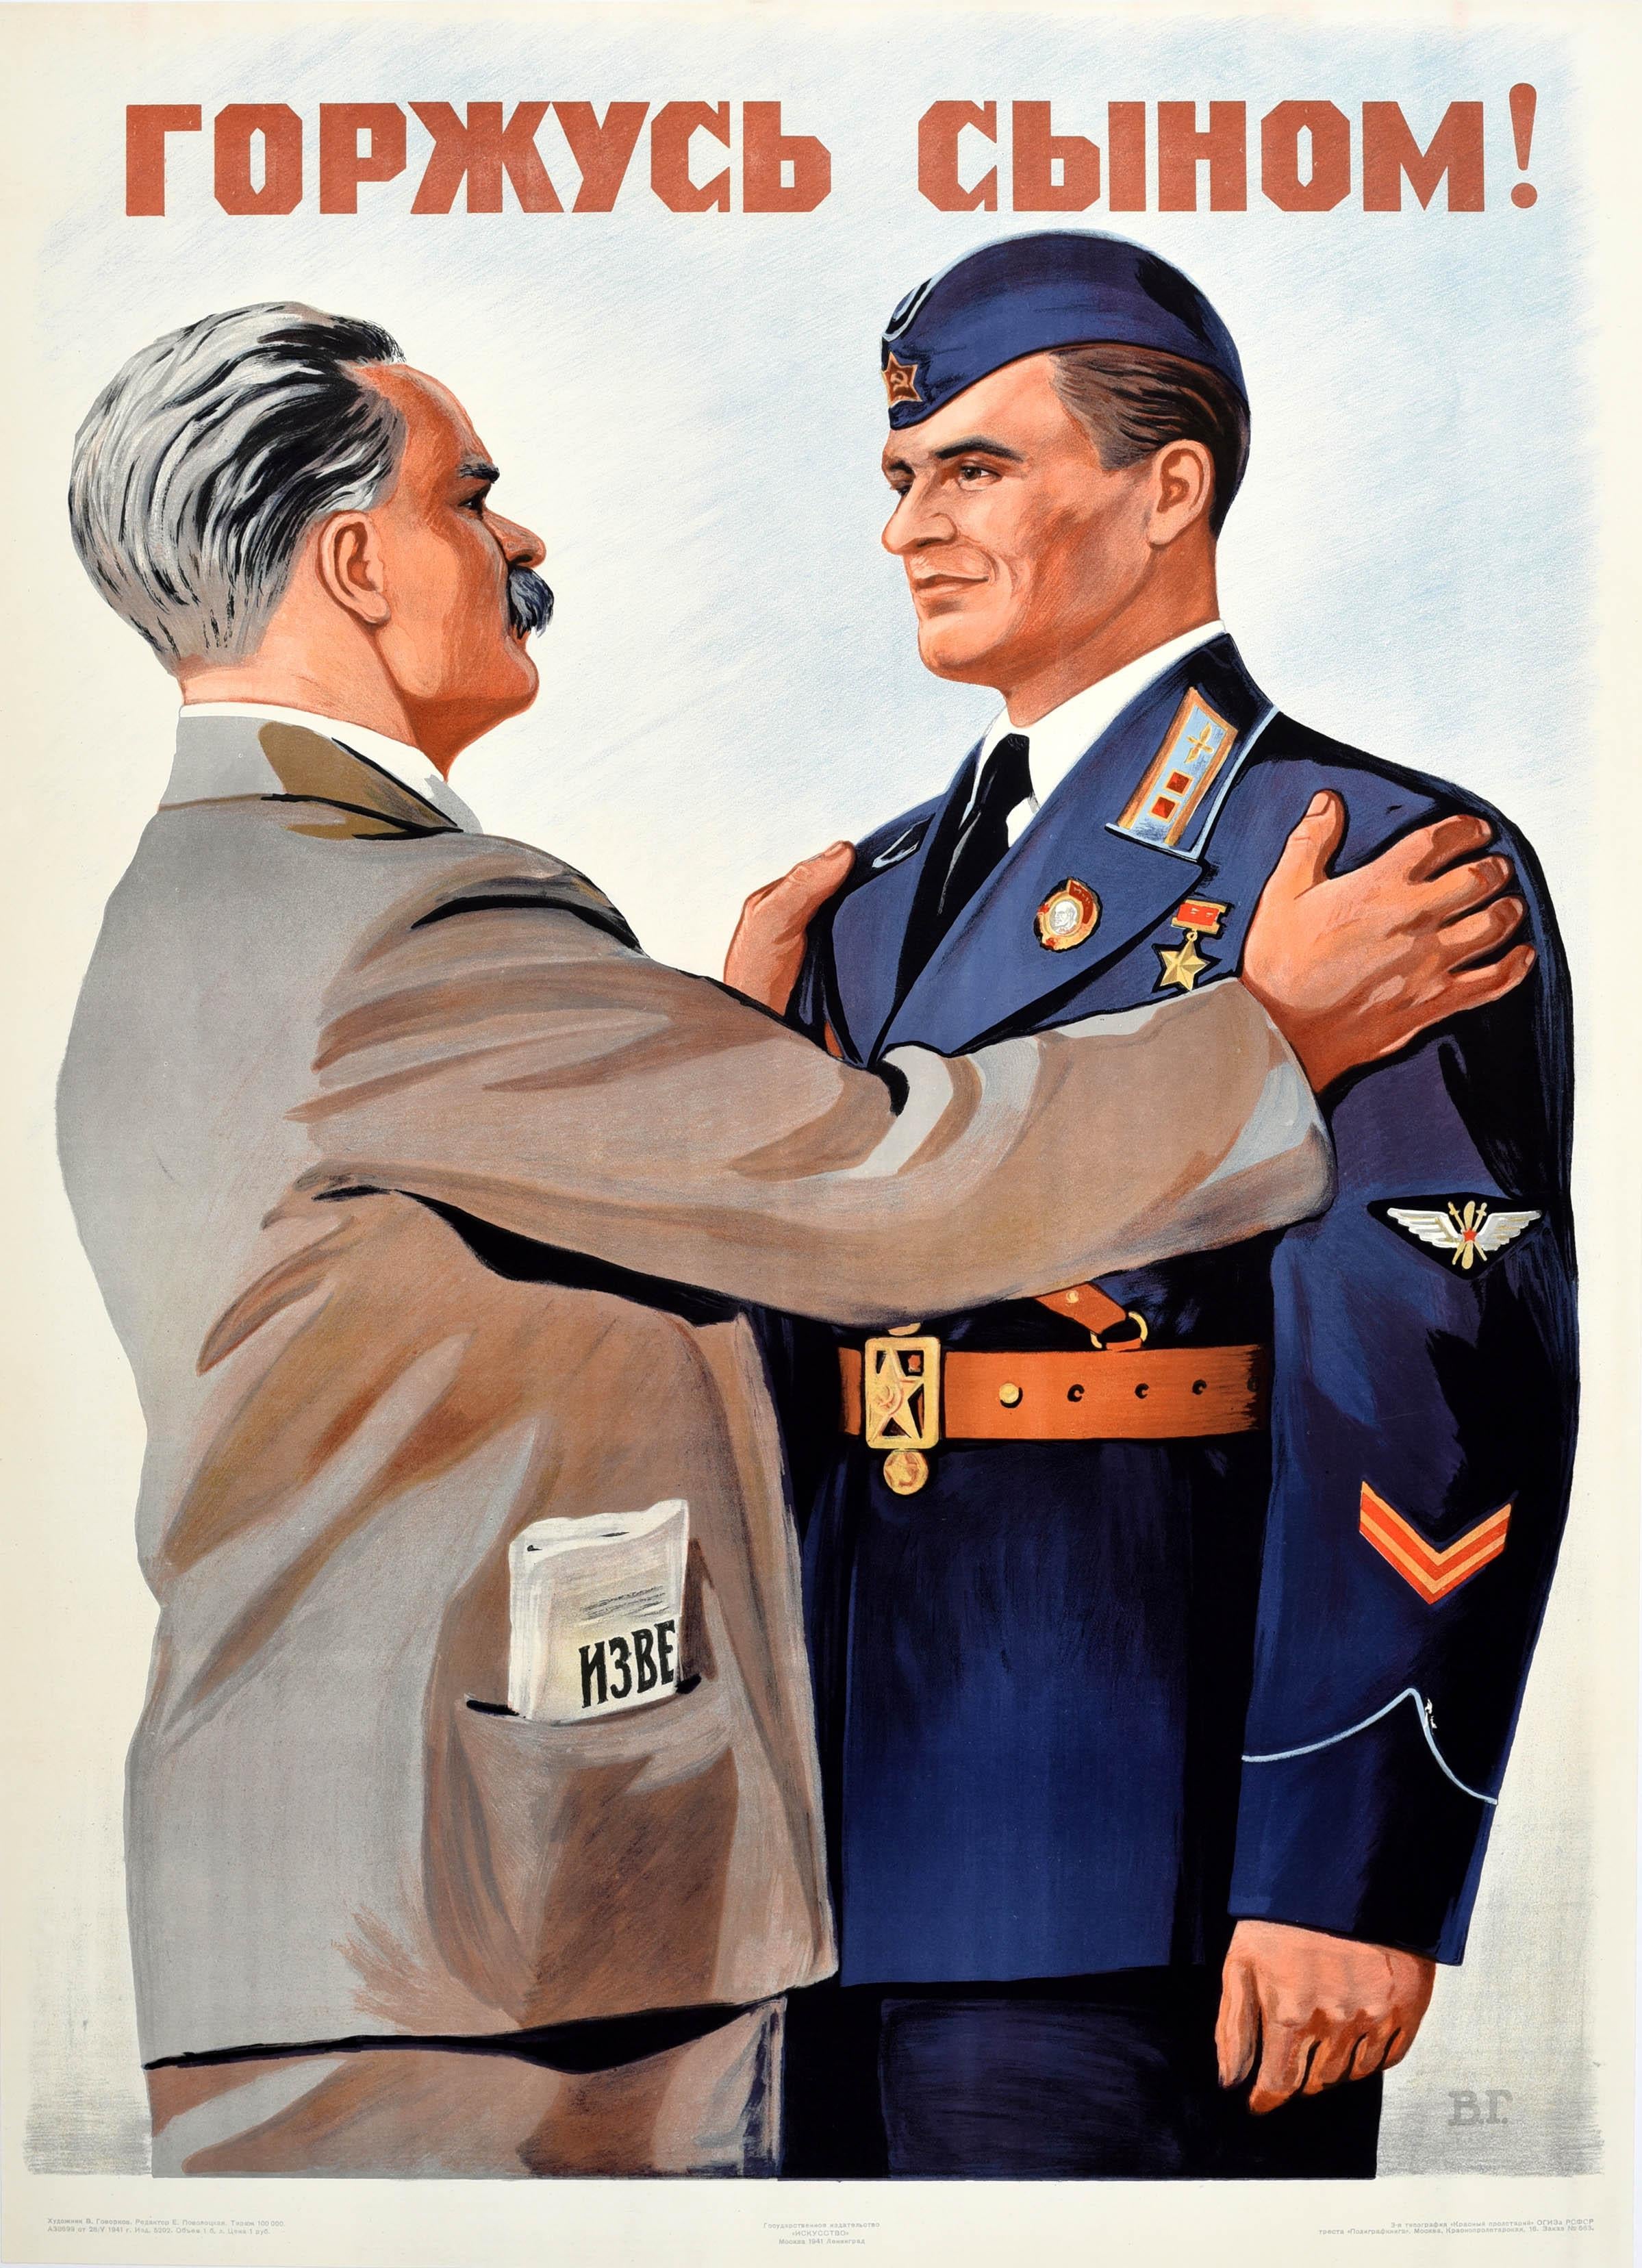 Govorkov Print - Original Vintage War Propaganda Poster Soviet Air Force Pilot Hero Pride USSR